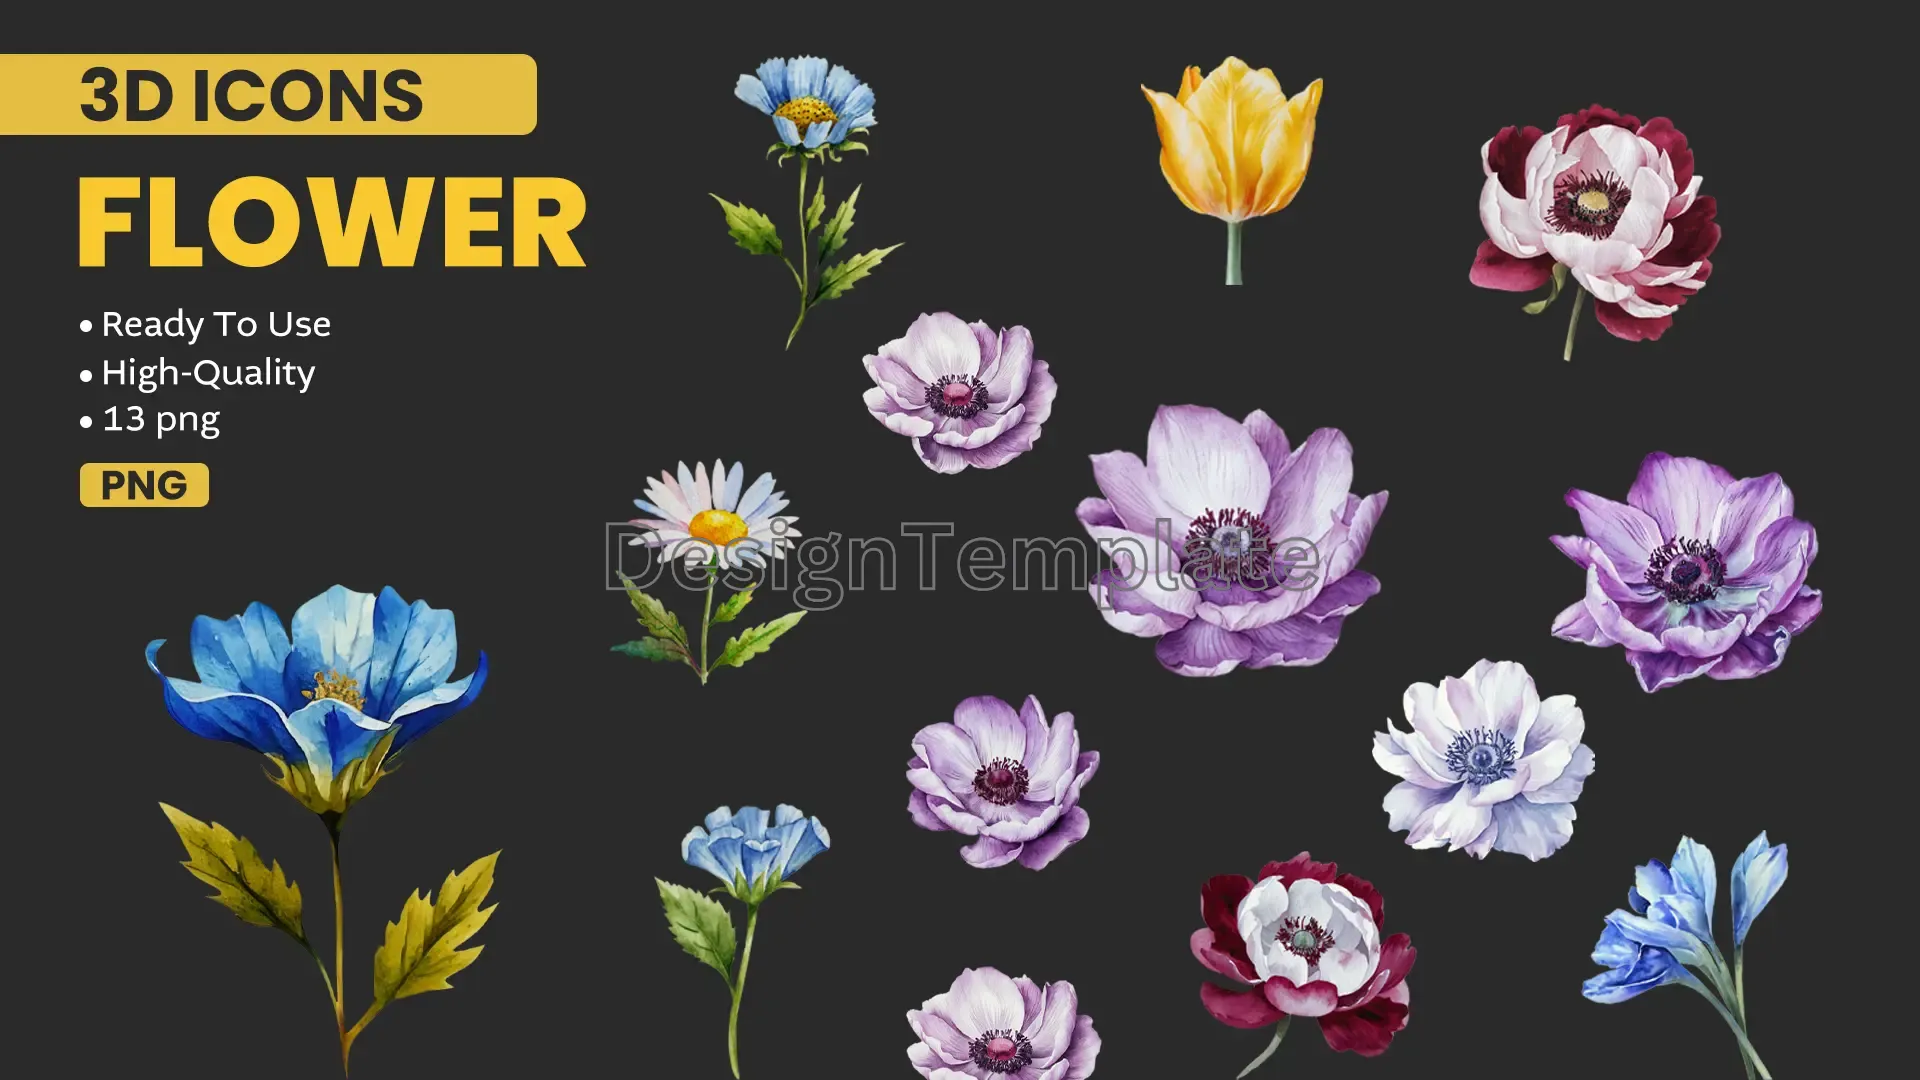 Watercolor Flower Vector Elements Pack